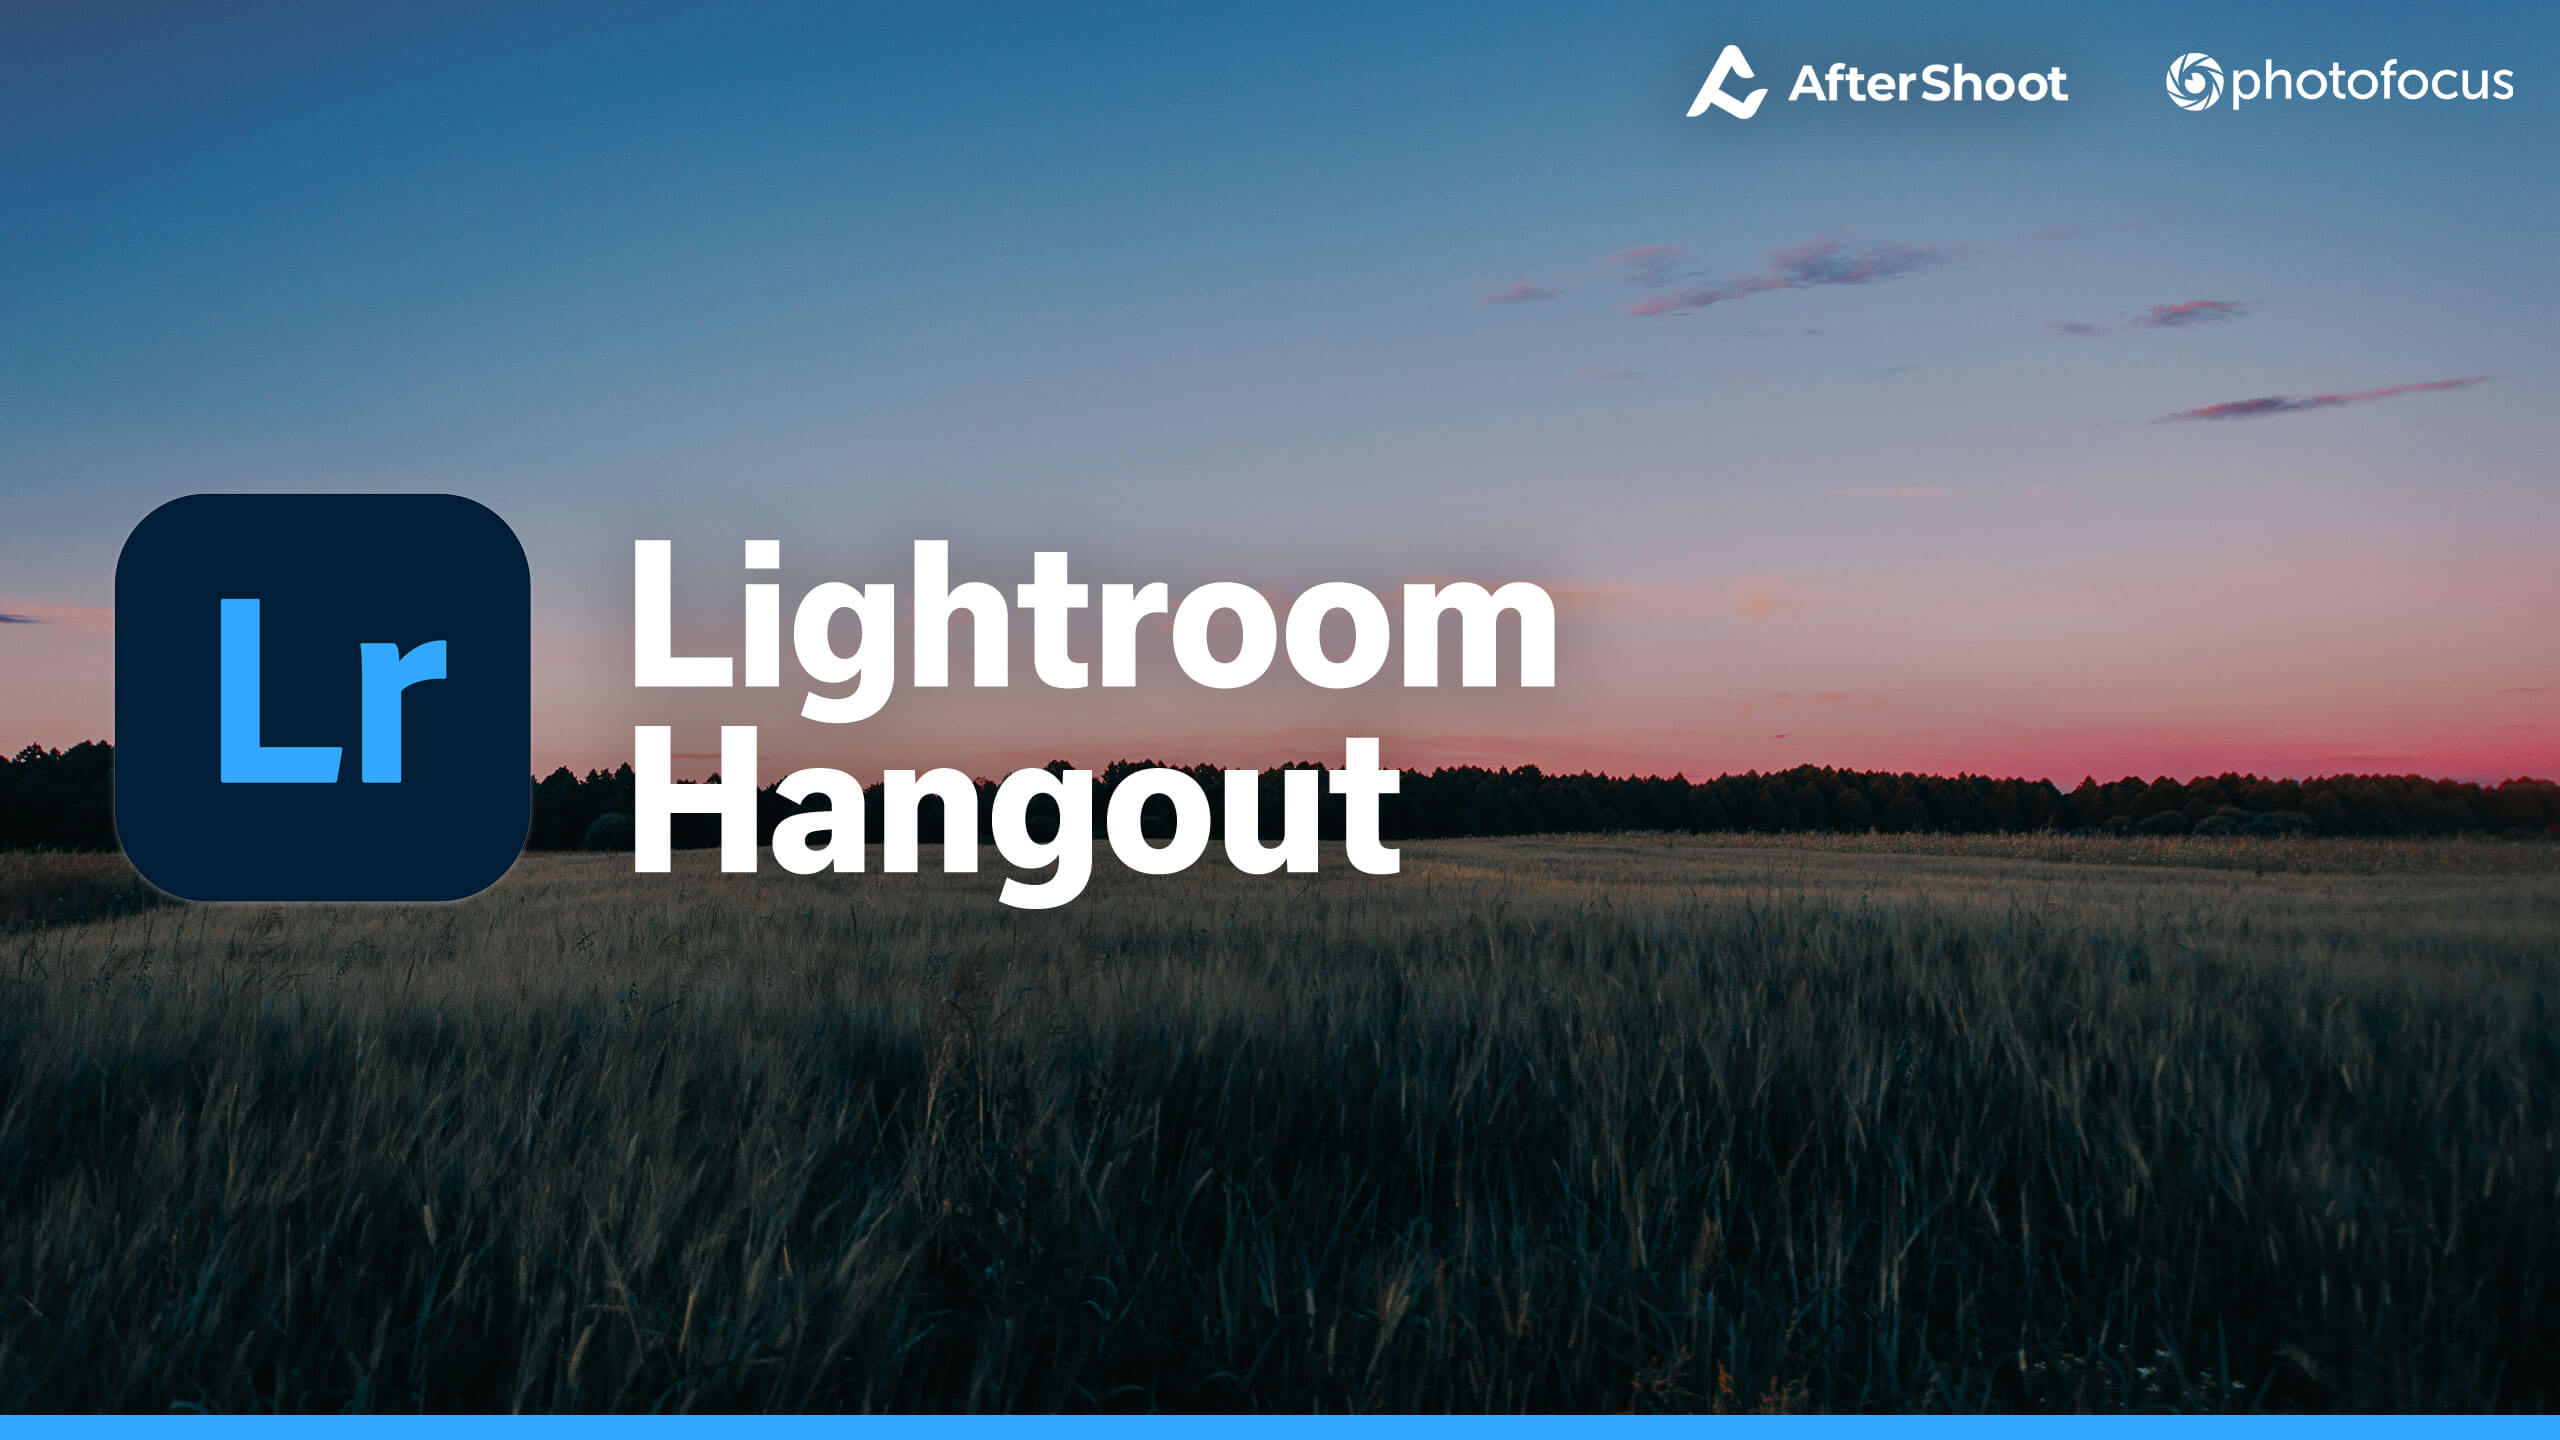 Lightroom Hangout: Join us during Sunday’s Lightroom Hangout